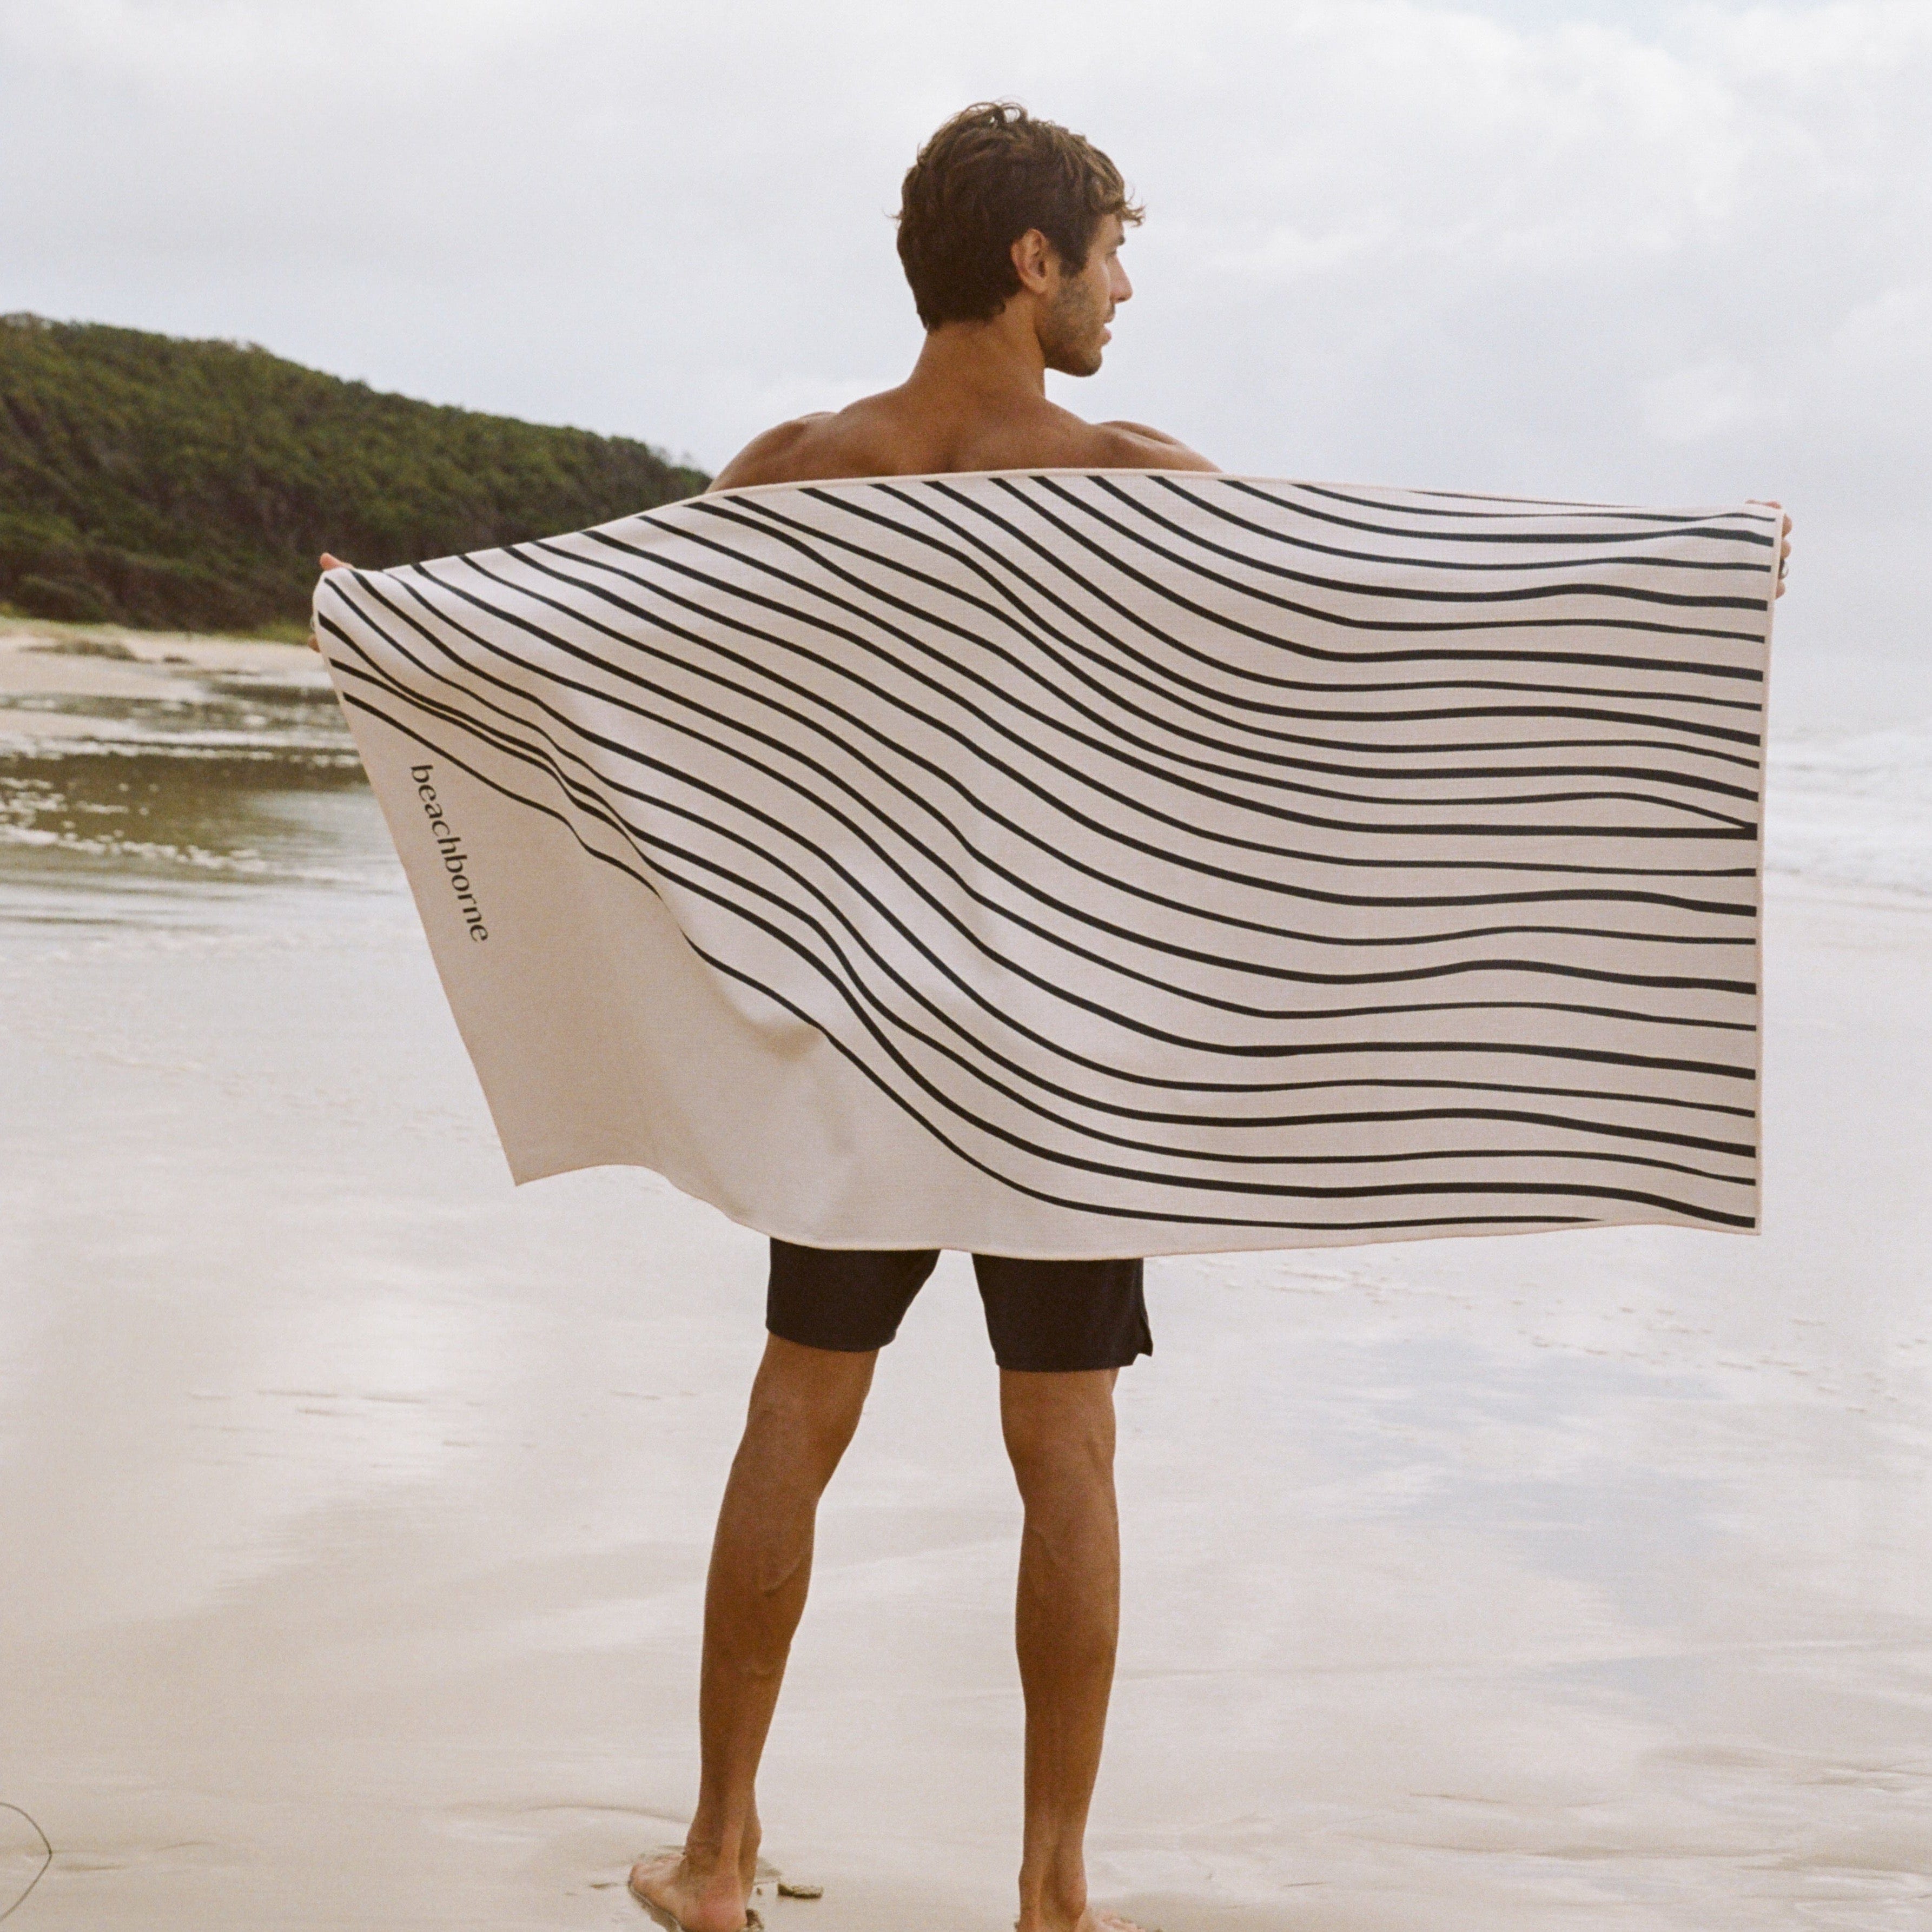 Ariel Coast Sand Free Beach Towel by Beachbourne